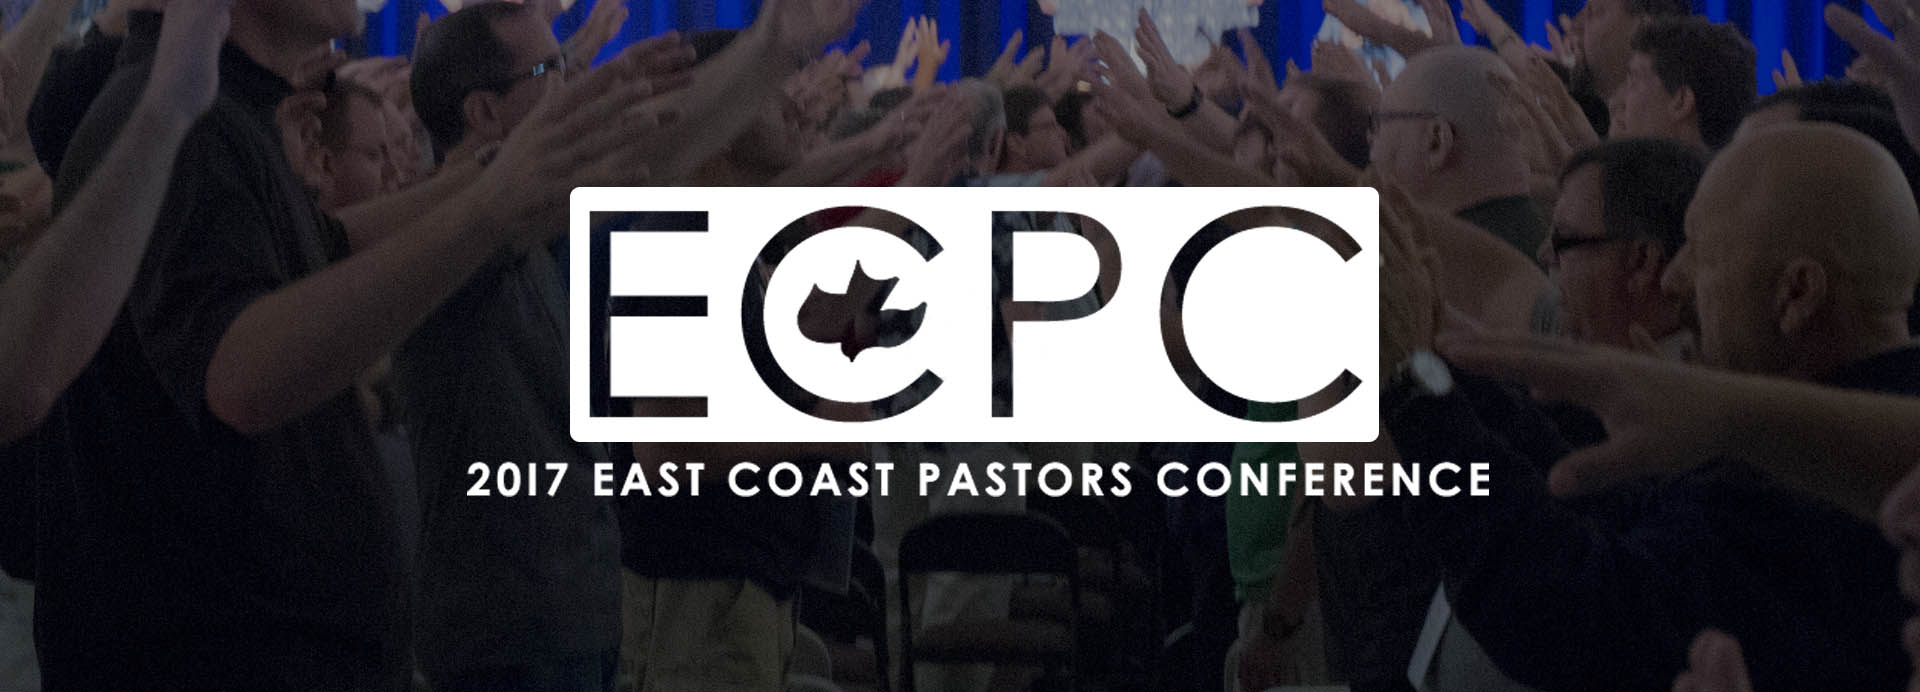 East Coast Pastors Conference 2017